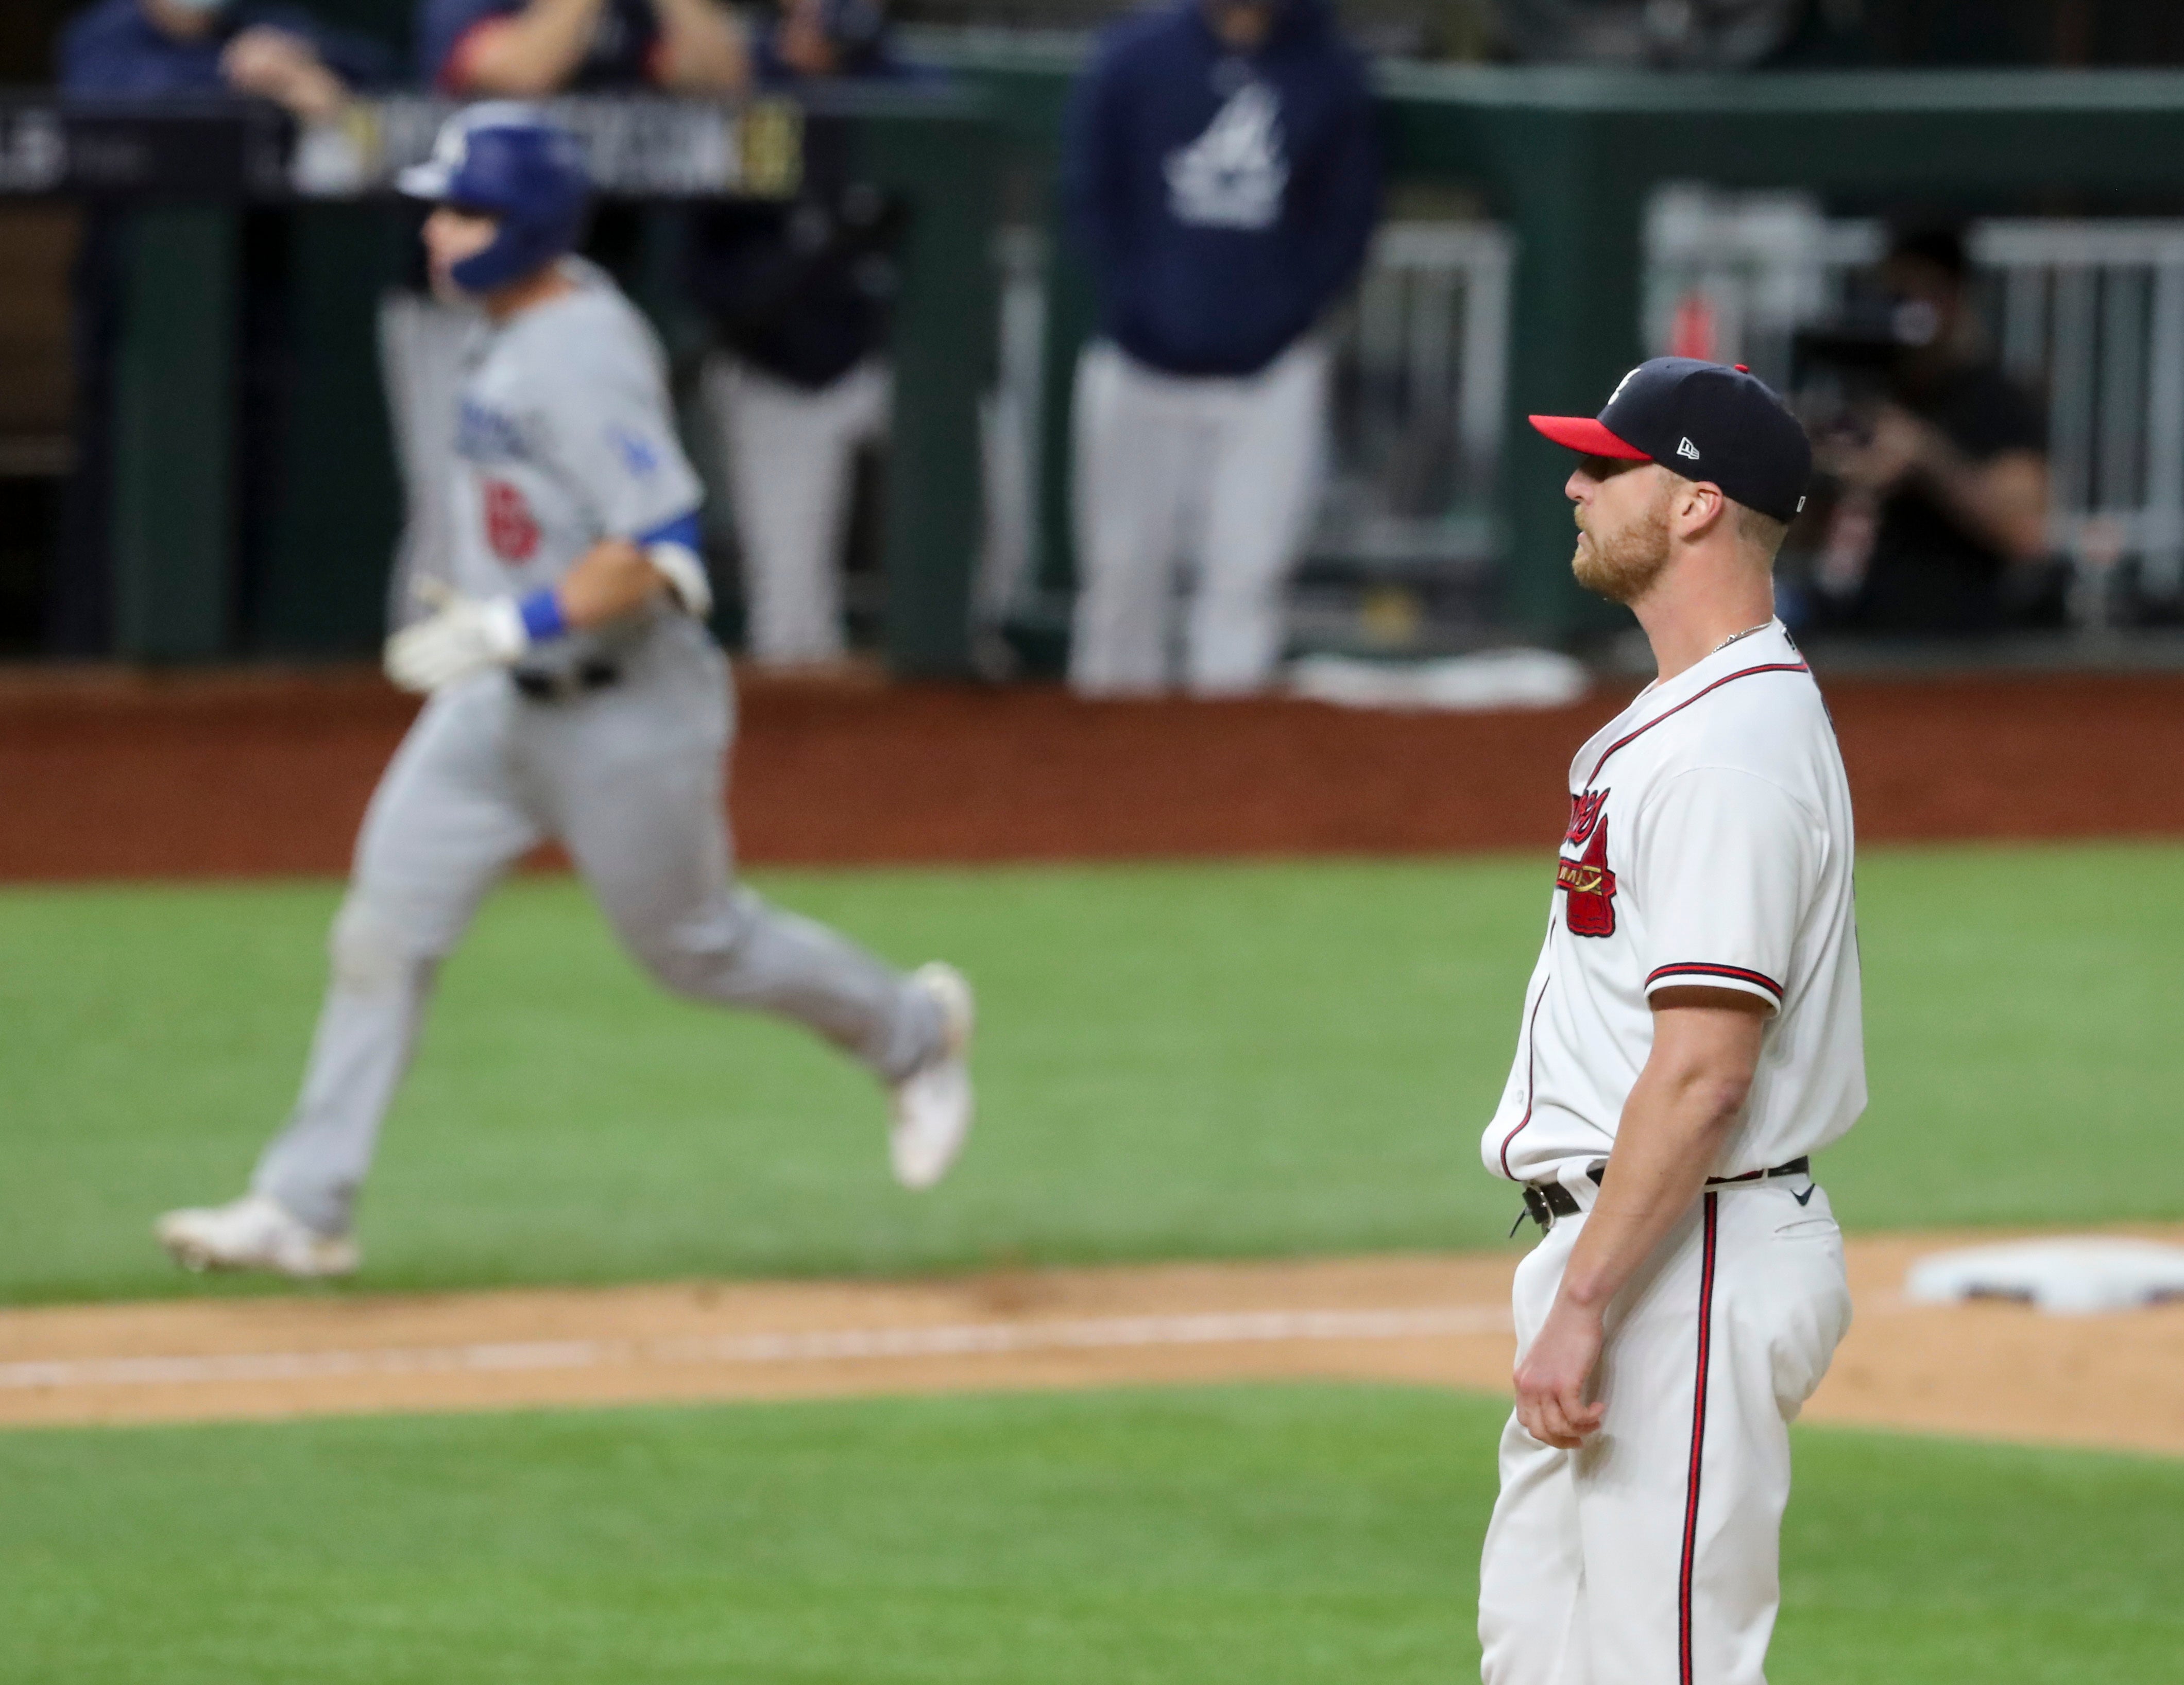 Sox win on Betts' 3-run homer in 9th